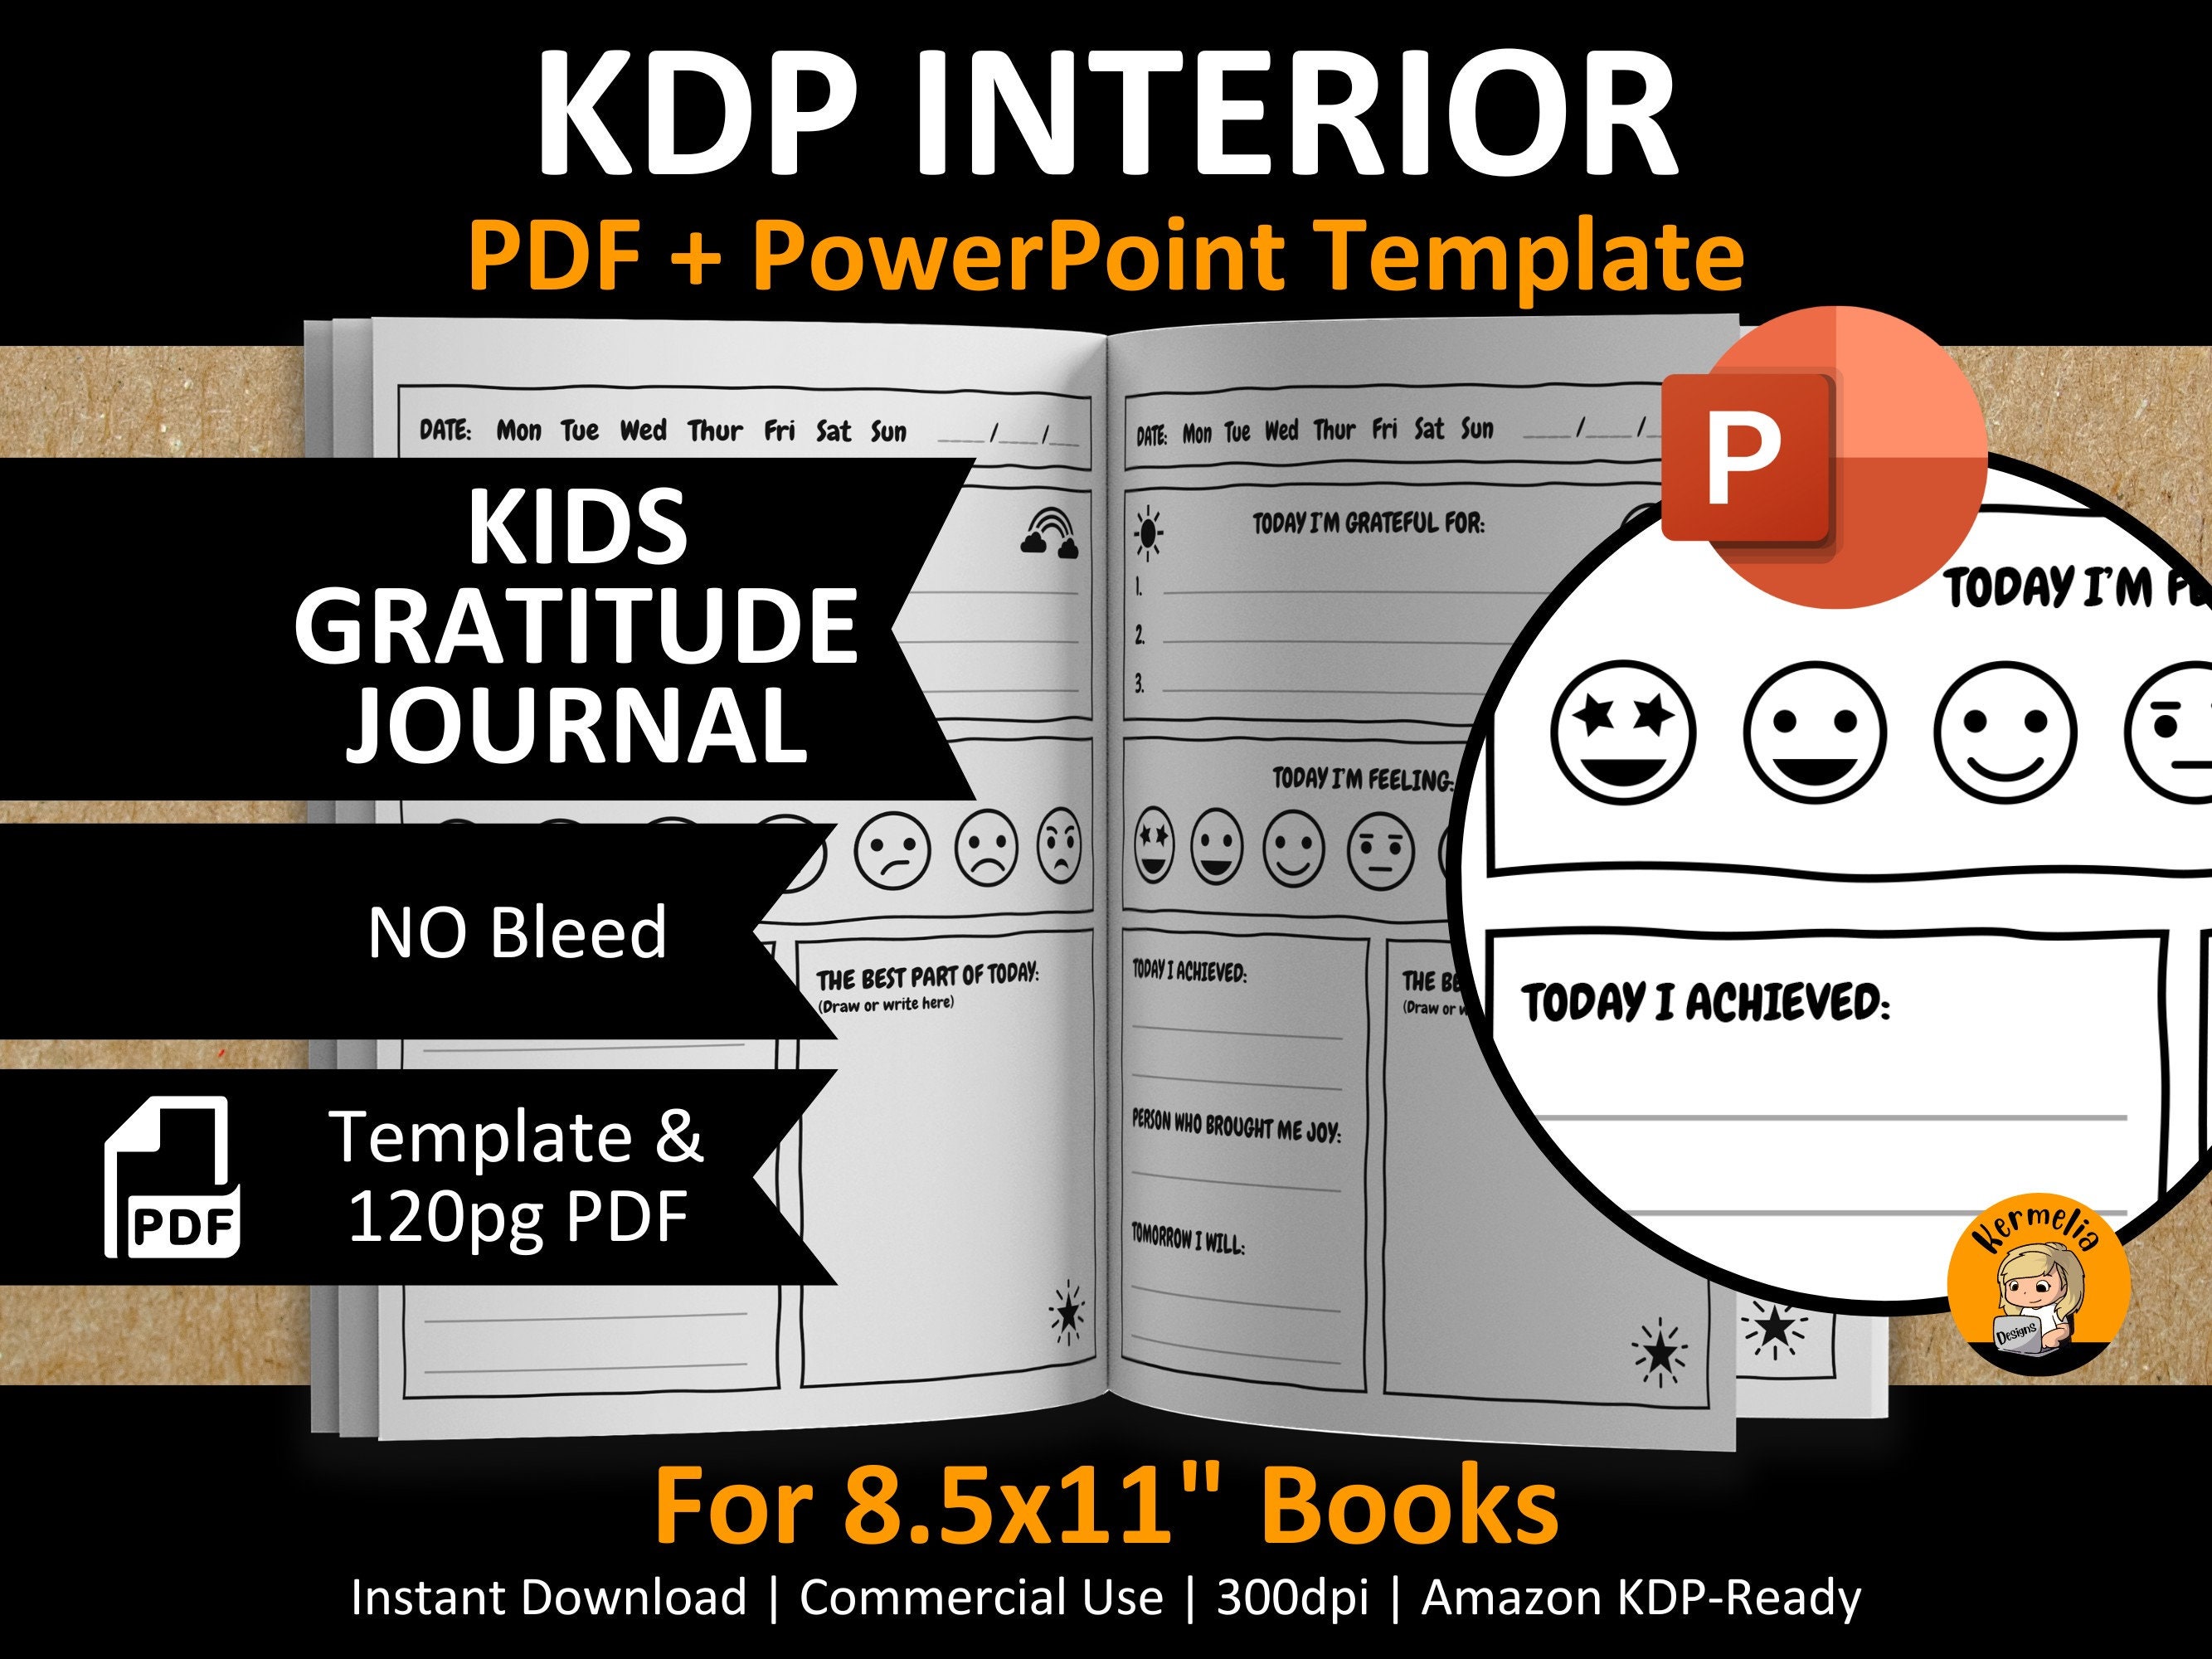 Daily Gratitude Journal For Women KDP Interior